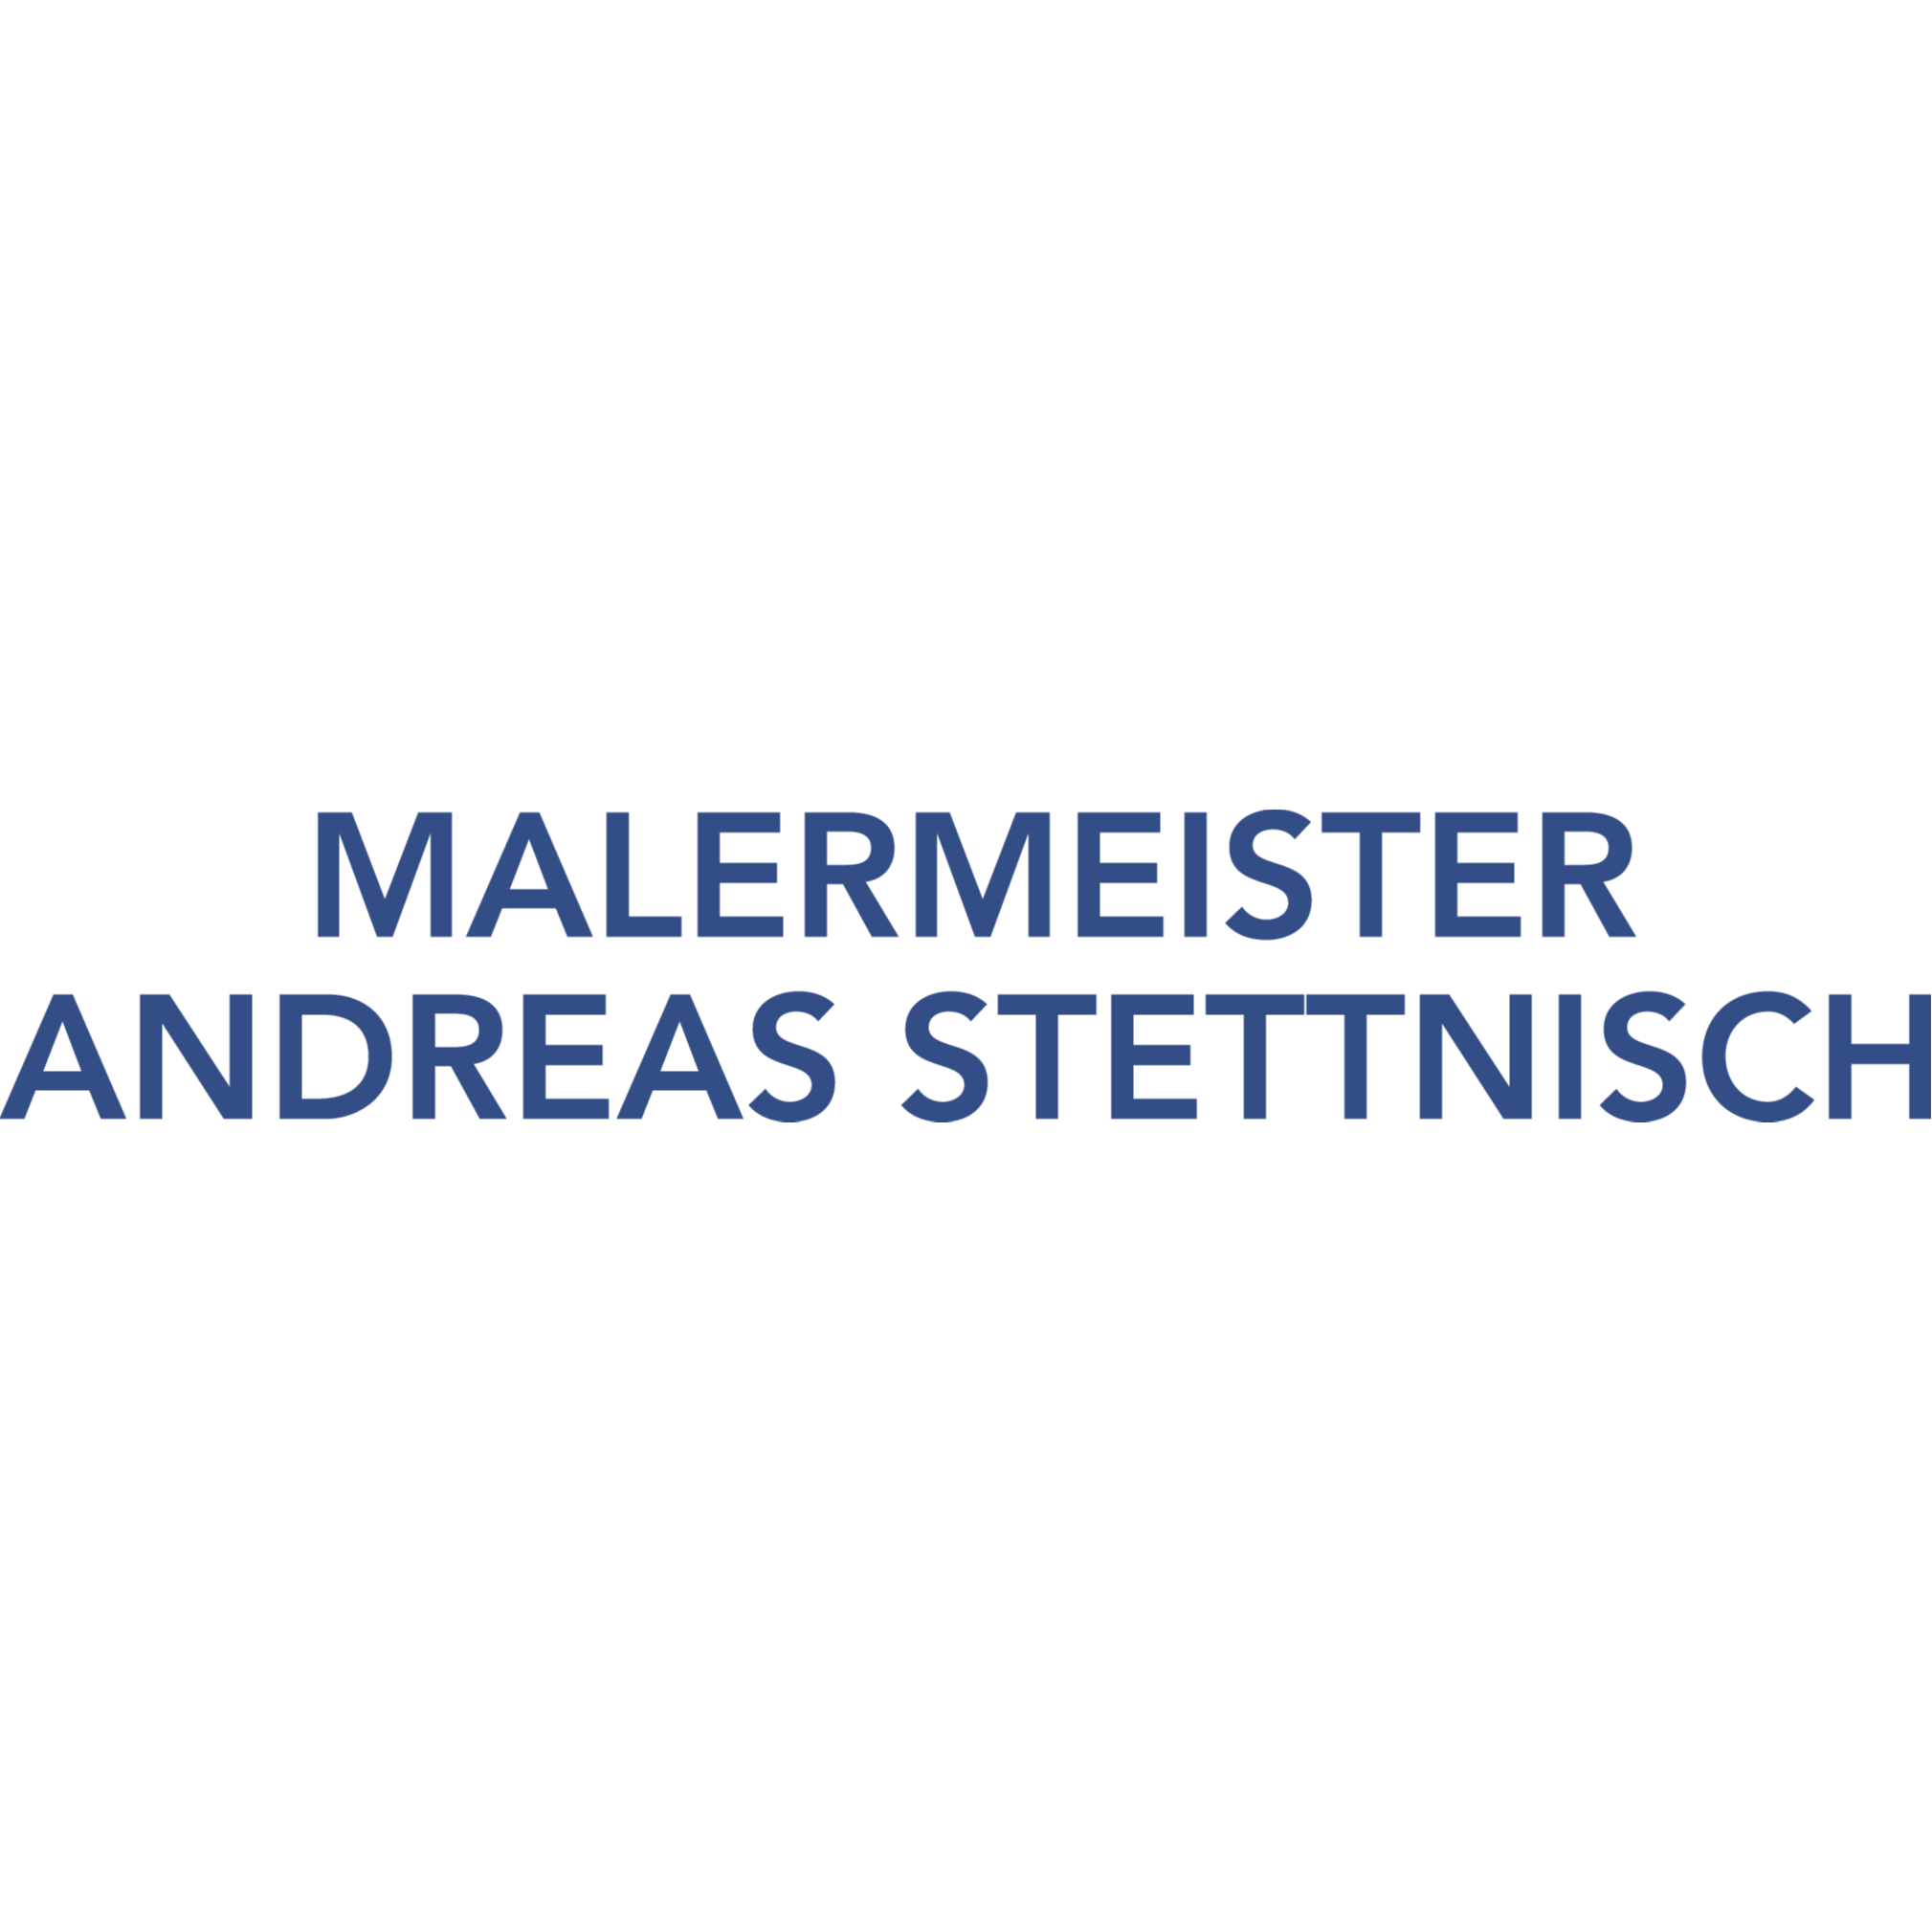 Malermeister Andreas Stettnisch Logo